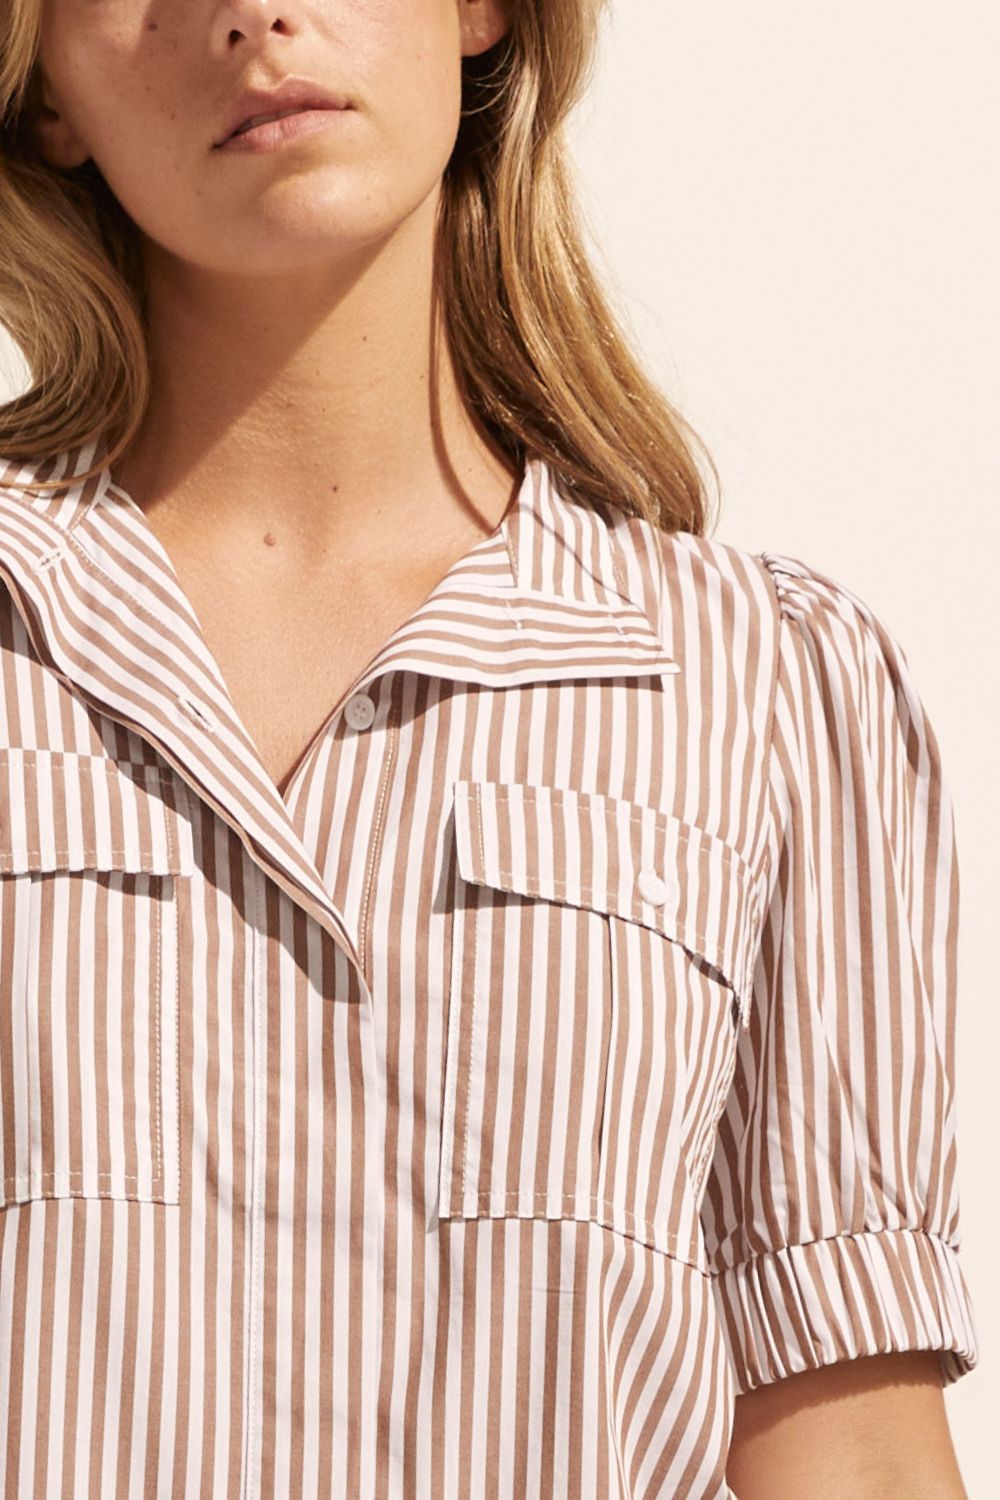 brown stripe, high neck, button up shirt, top, close up view